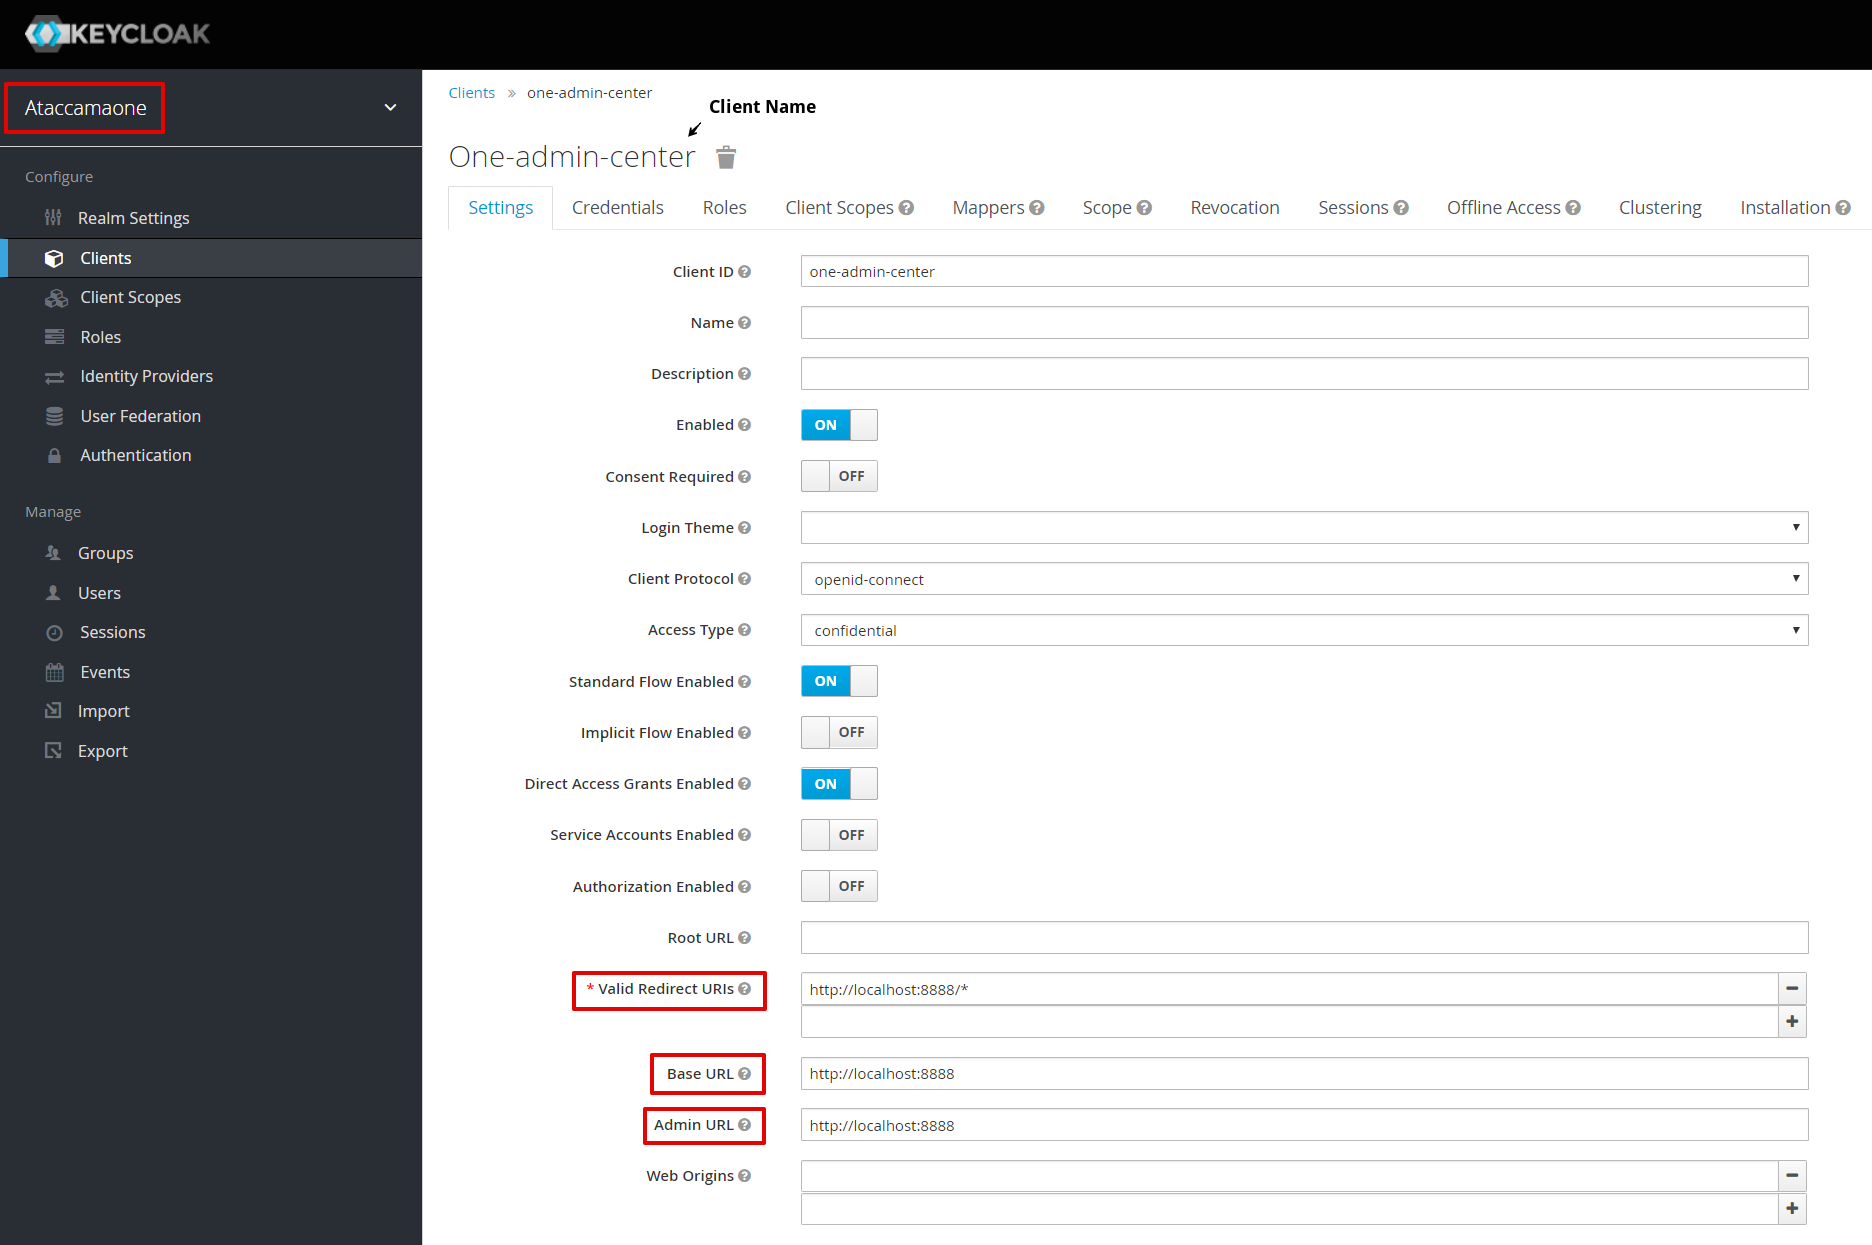 Configure one-admin-center client in Keycloak